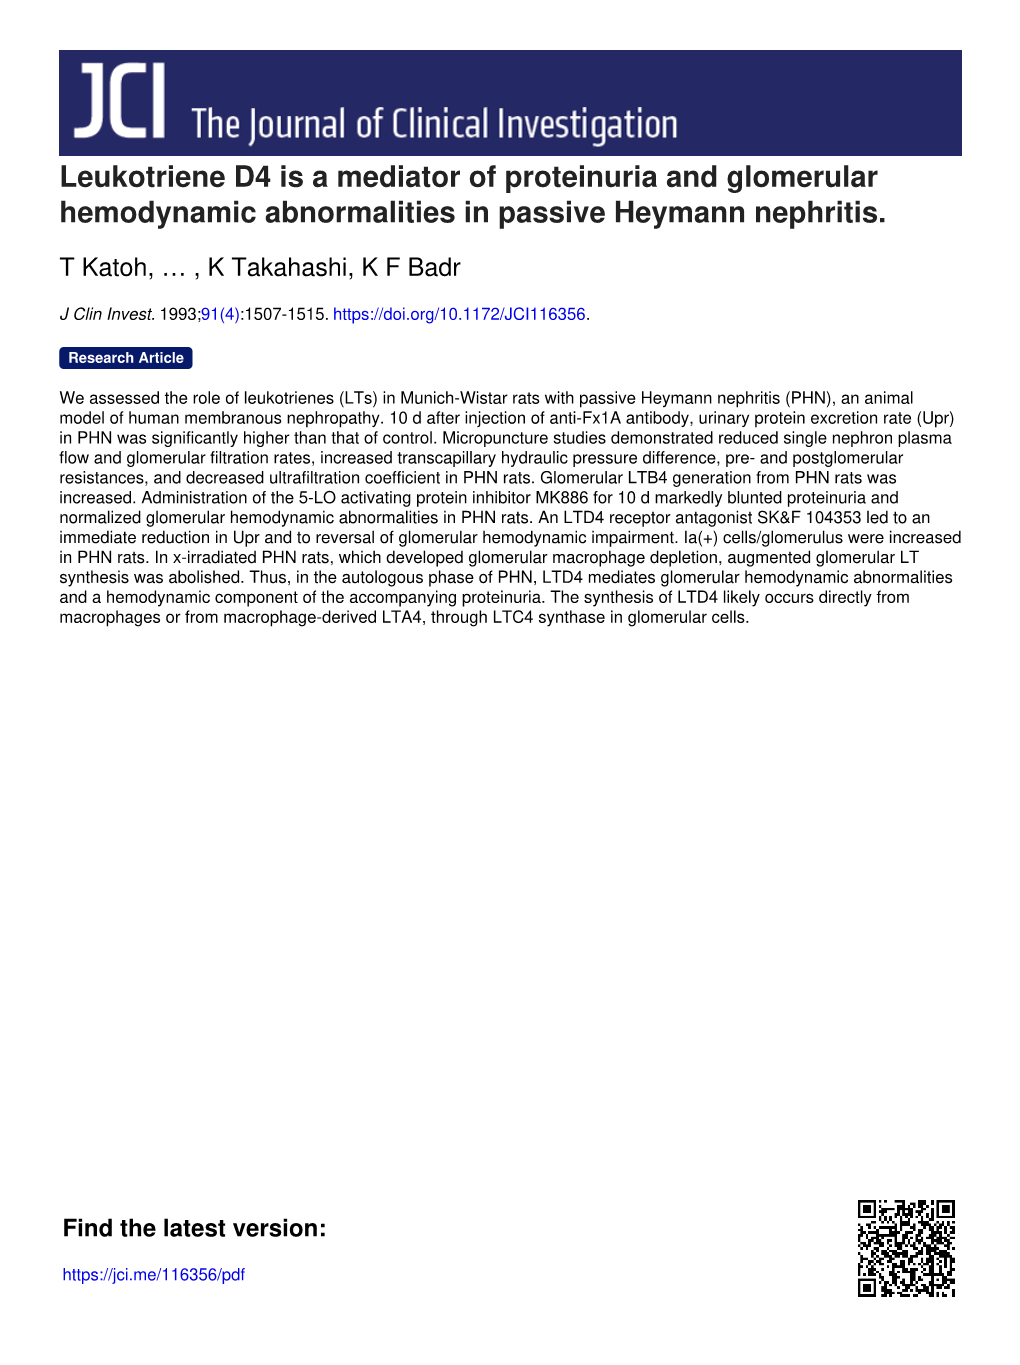 Leukotriene D4 Is a Mediator of Proteinuria and Glomerular Hemodynamic Abnormalities in Passive Heymann Nephritis